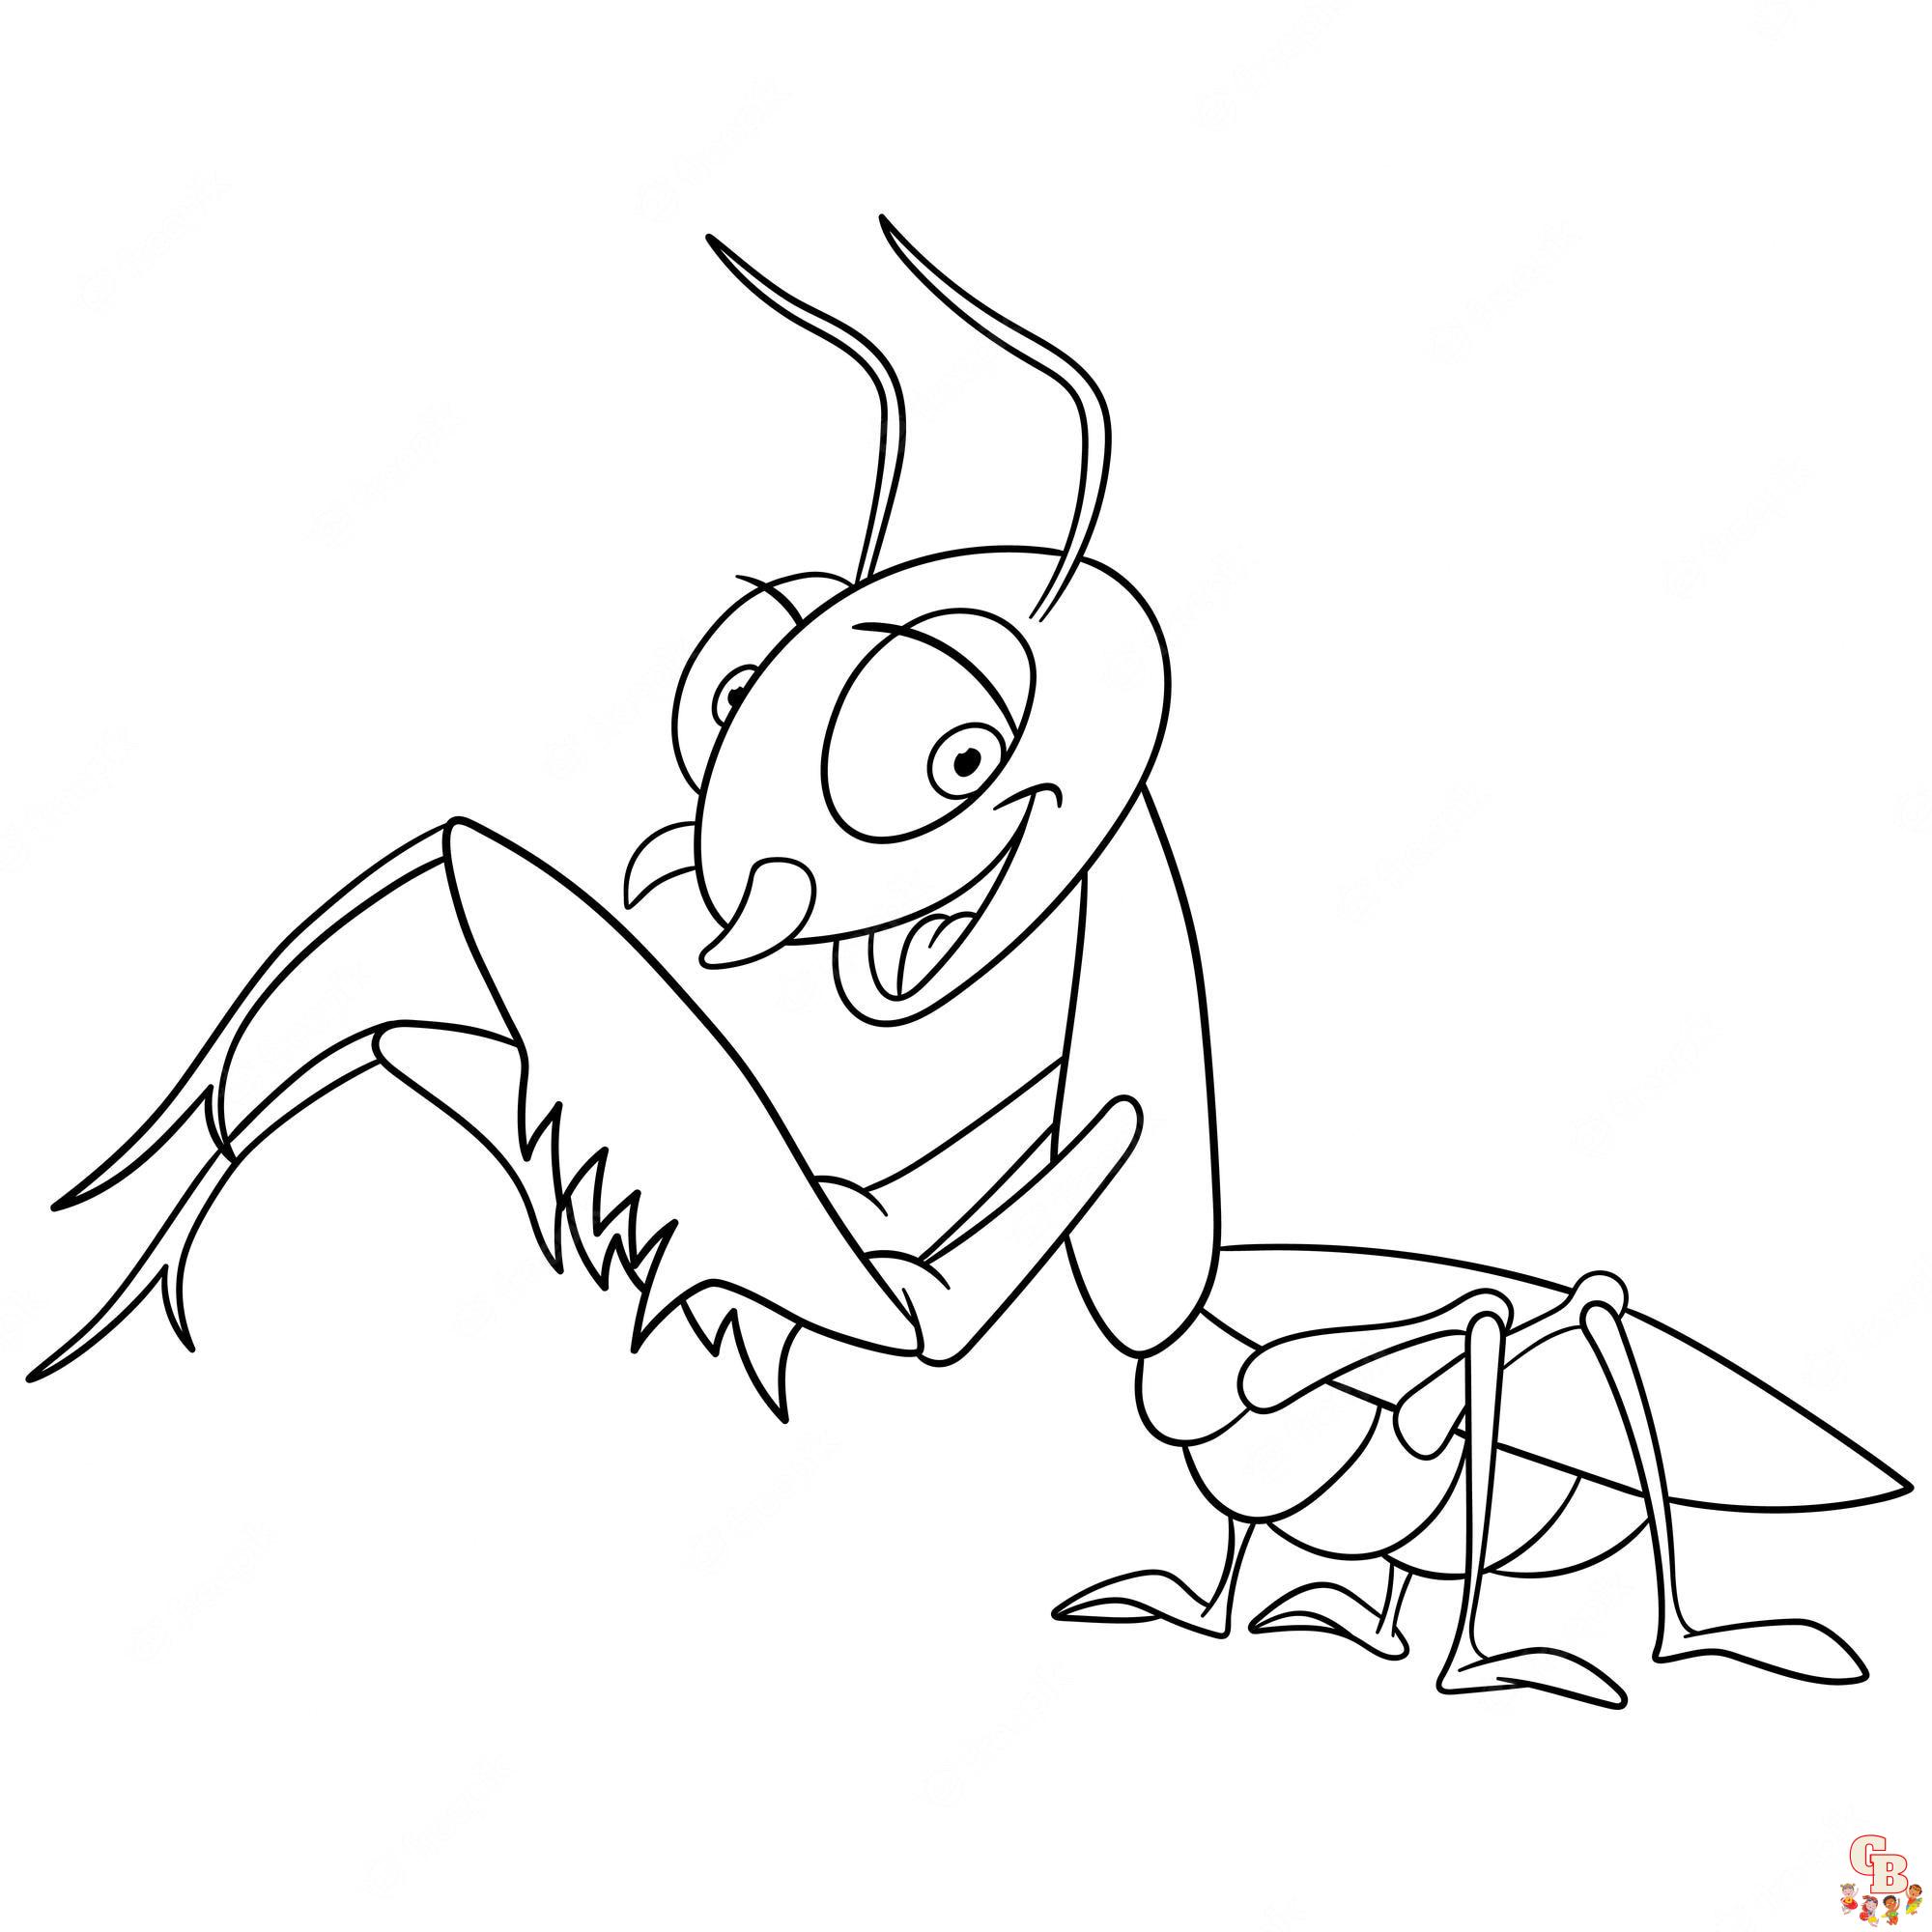 Cute Praying Mantis coloring pages printable free